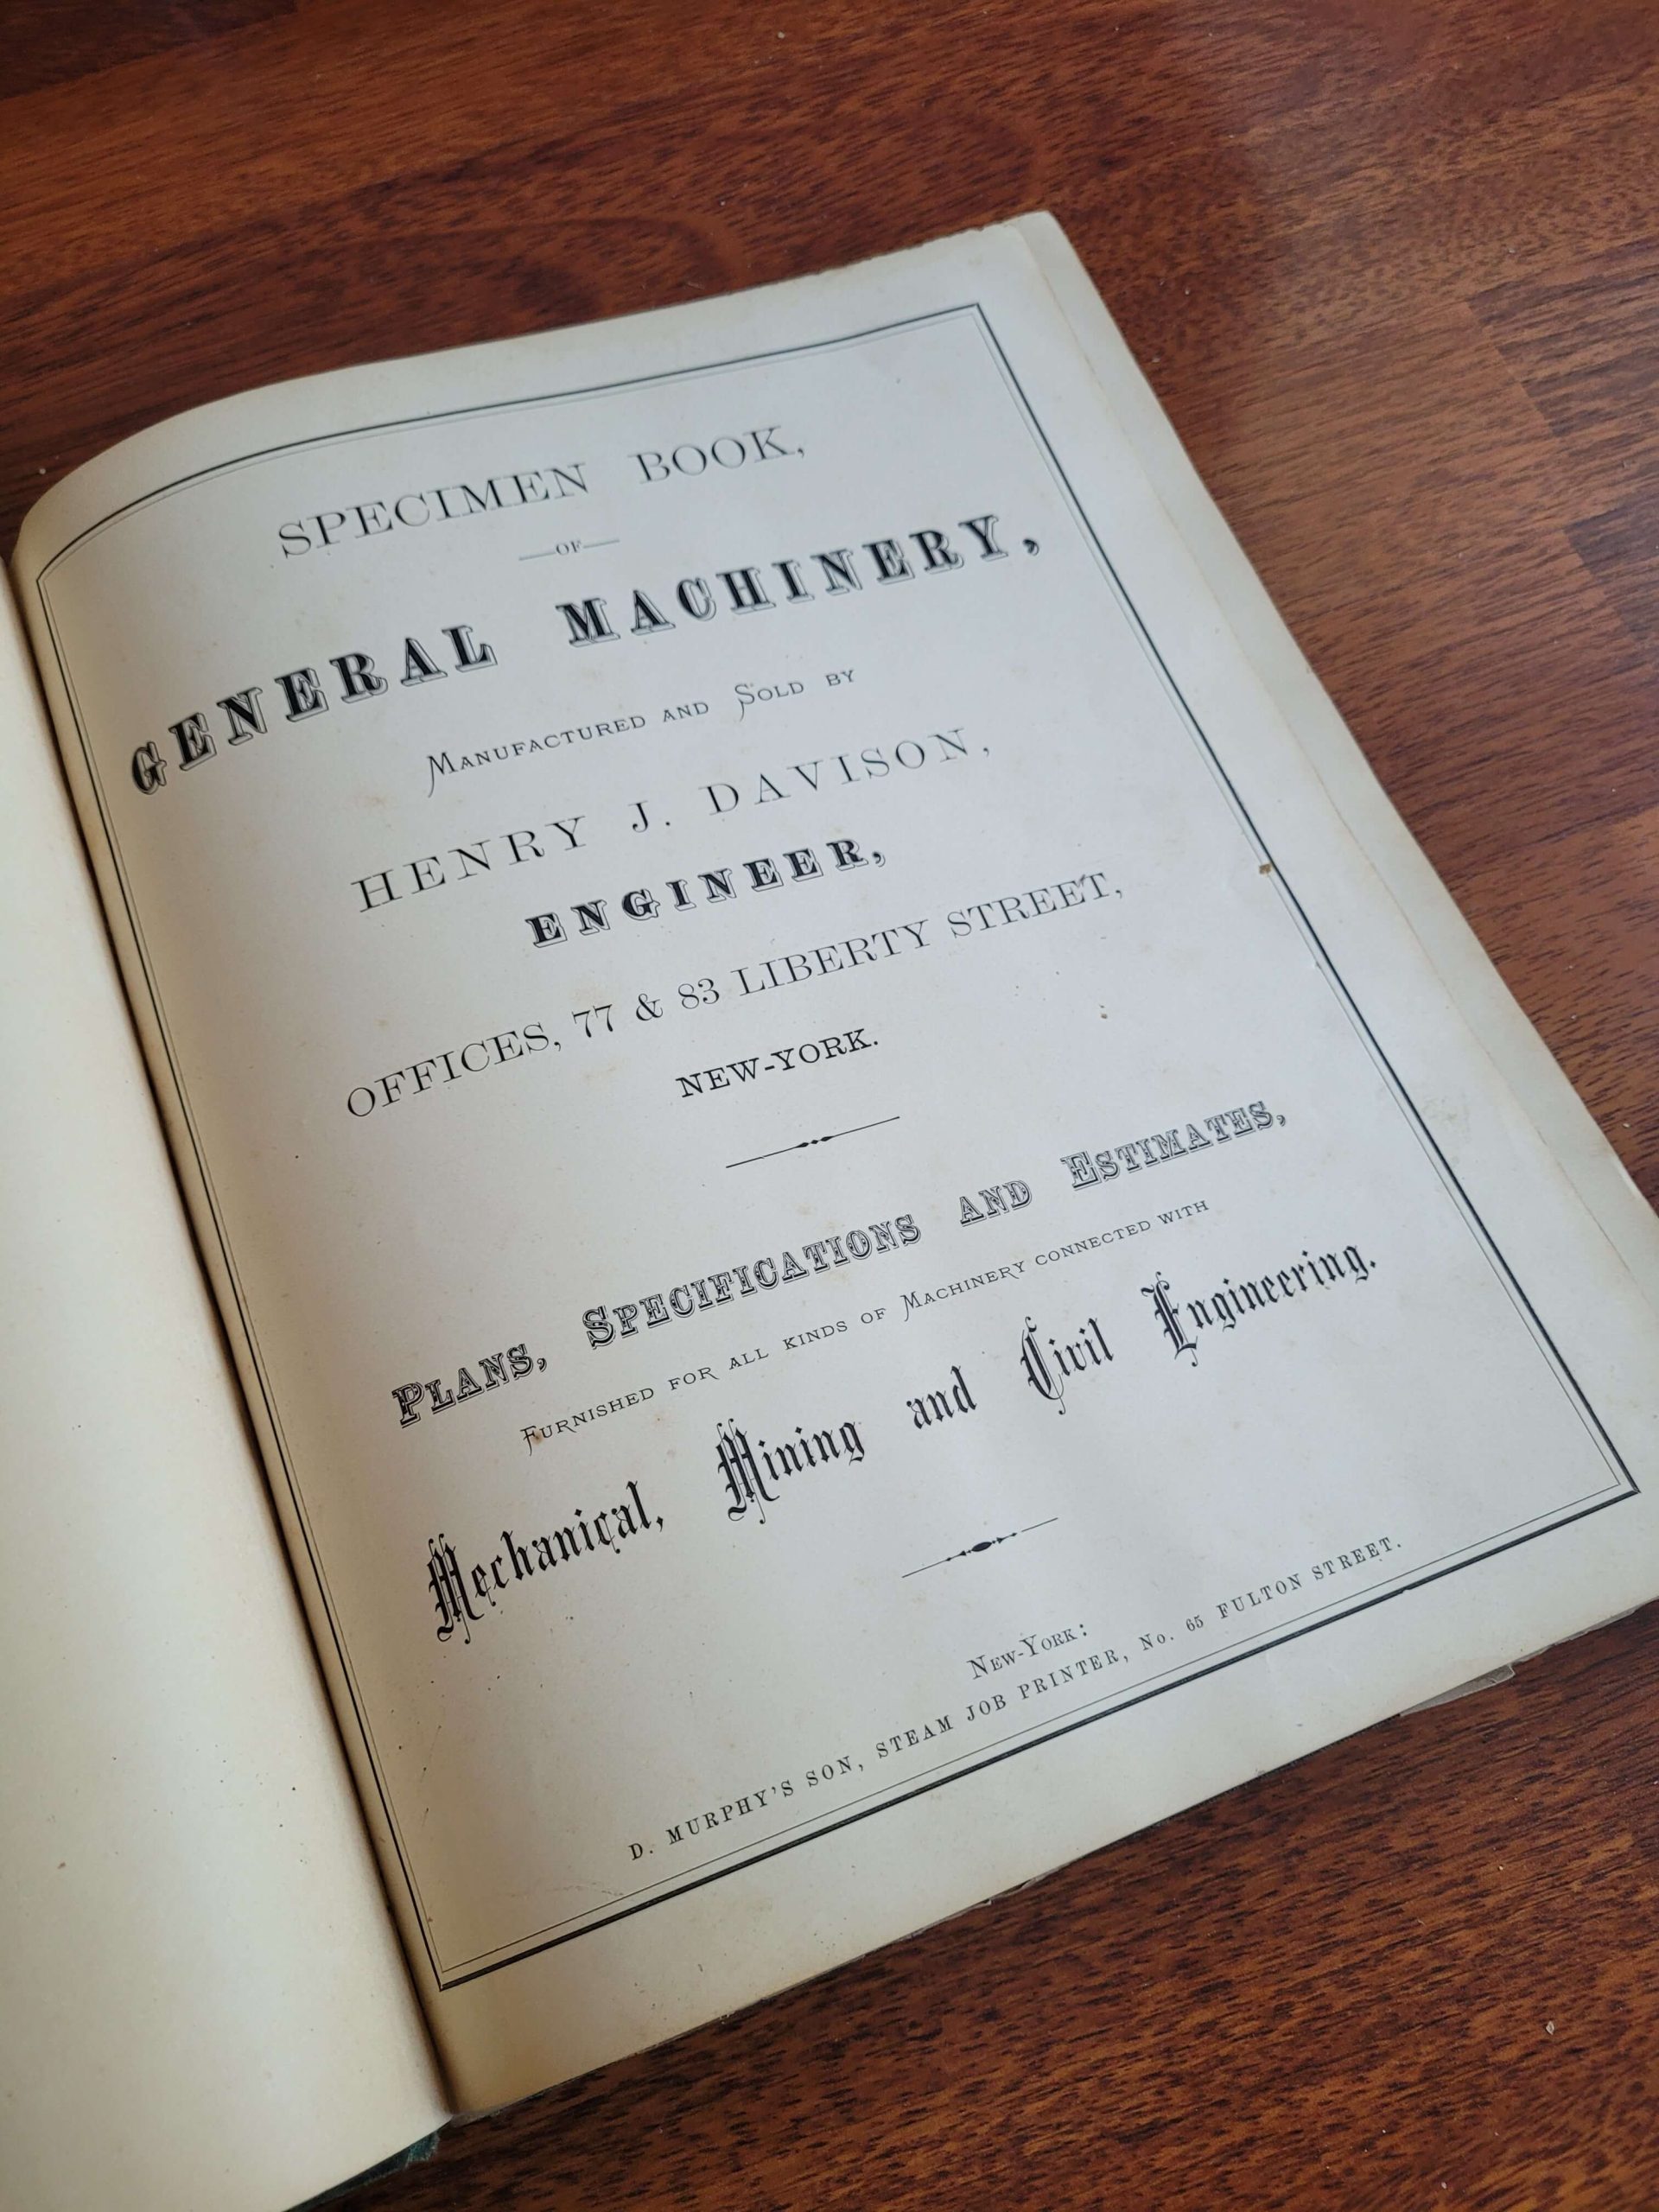 General Machinery (1869) (Henry J. Davidson)